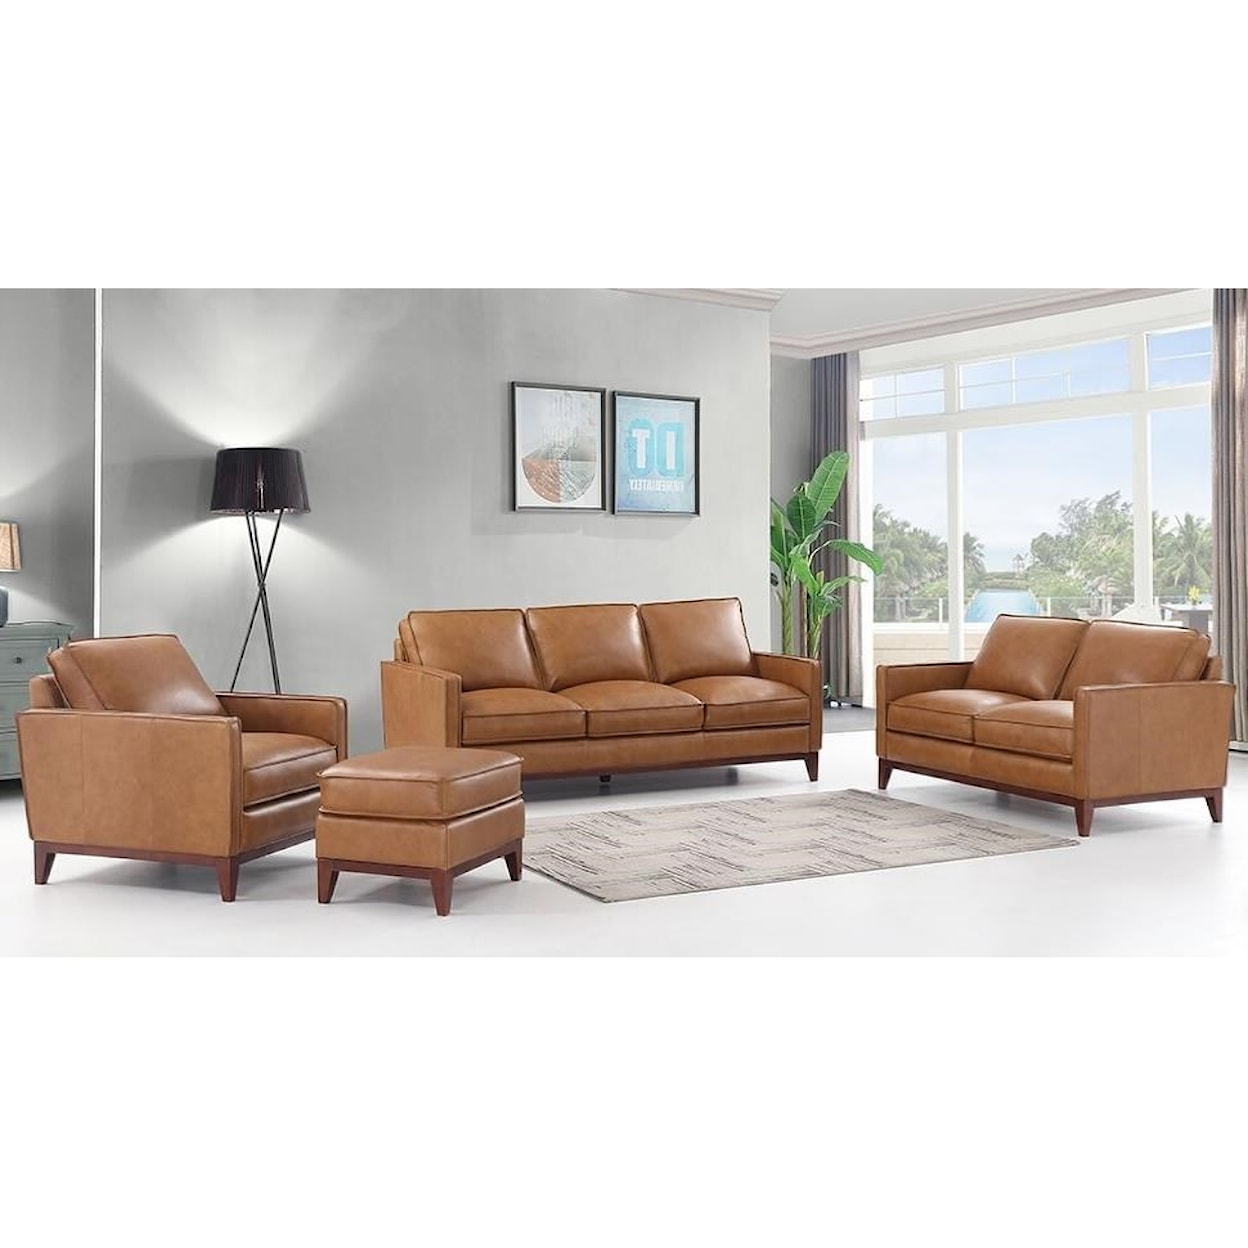 Carolina Leather Newport Stationary Living Room Group